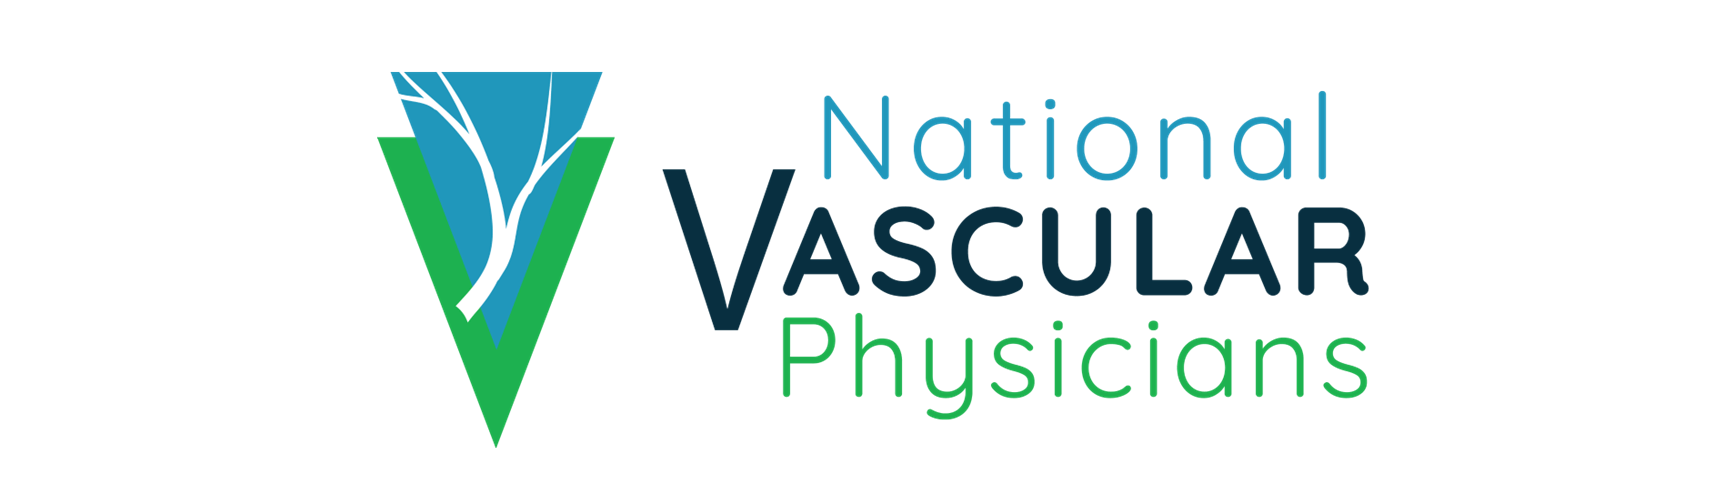 national vascular physicians near me